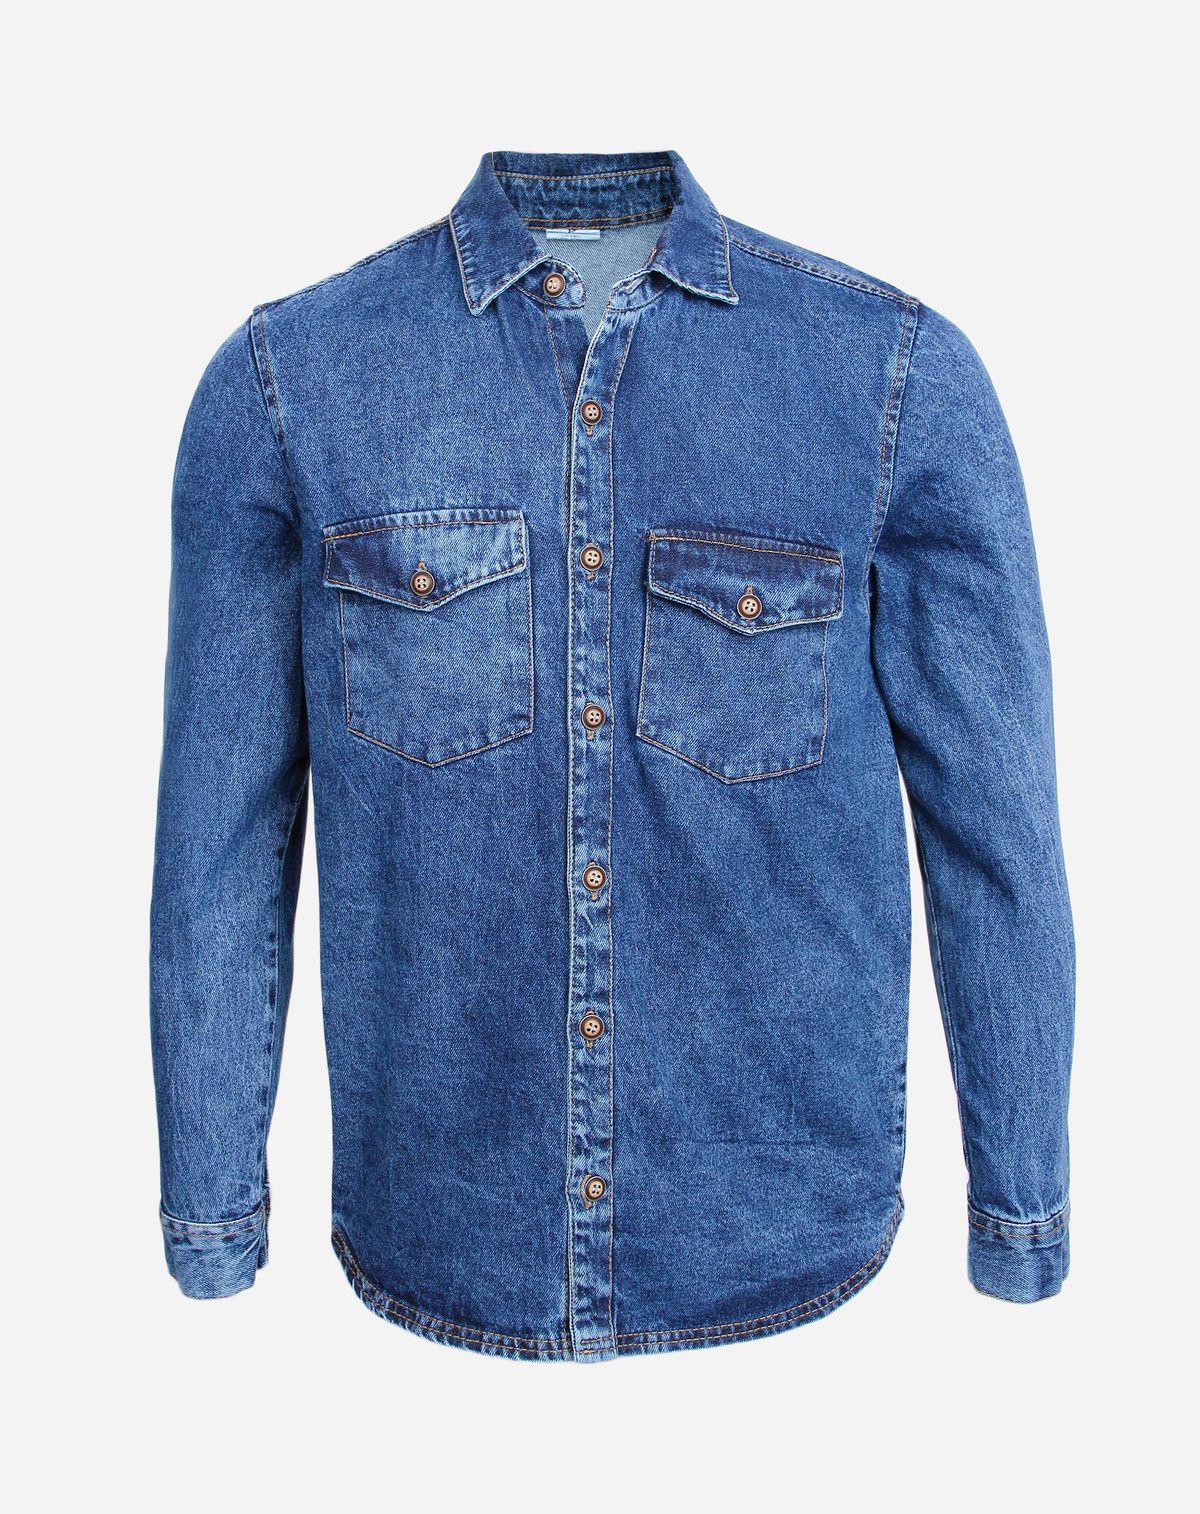 655520001-camisa-jeans-manga-longa-masculina-jeans-p-30d